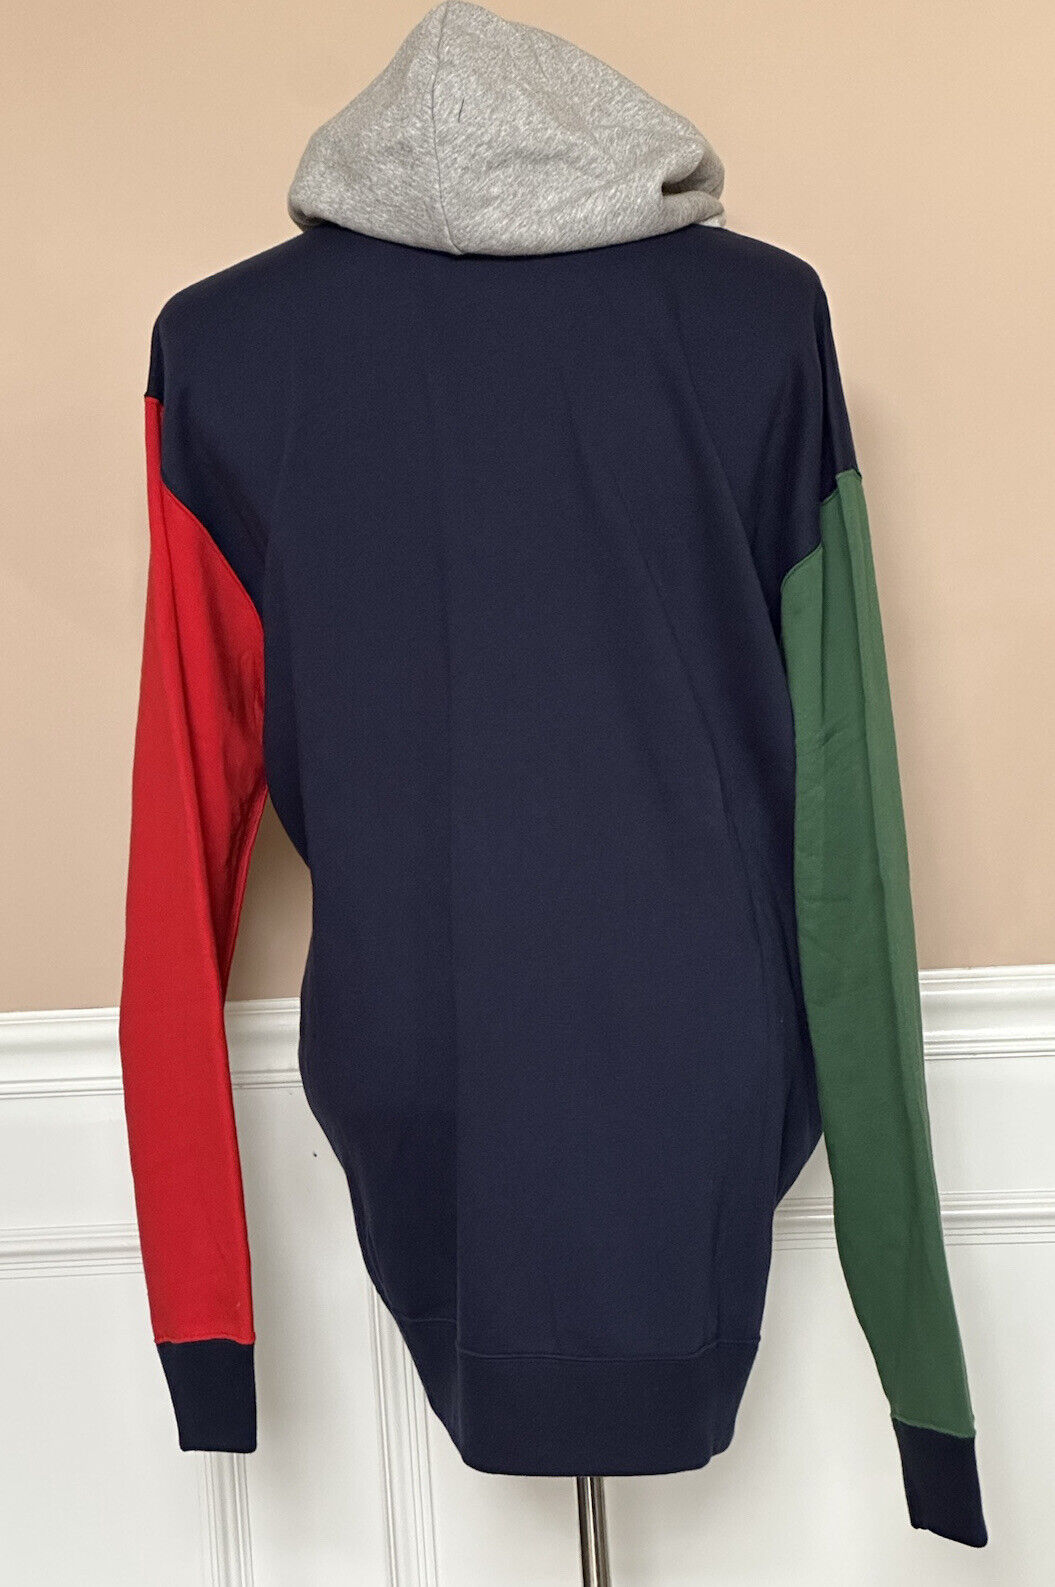 NWT $188 Polo Ralph Lauren Bear Sweatshirt with Hoodie Blue/Green/Red 2XLT/2TGL